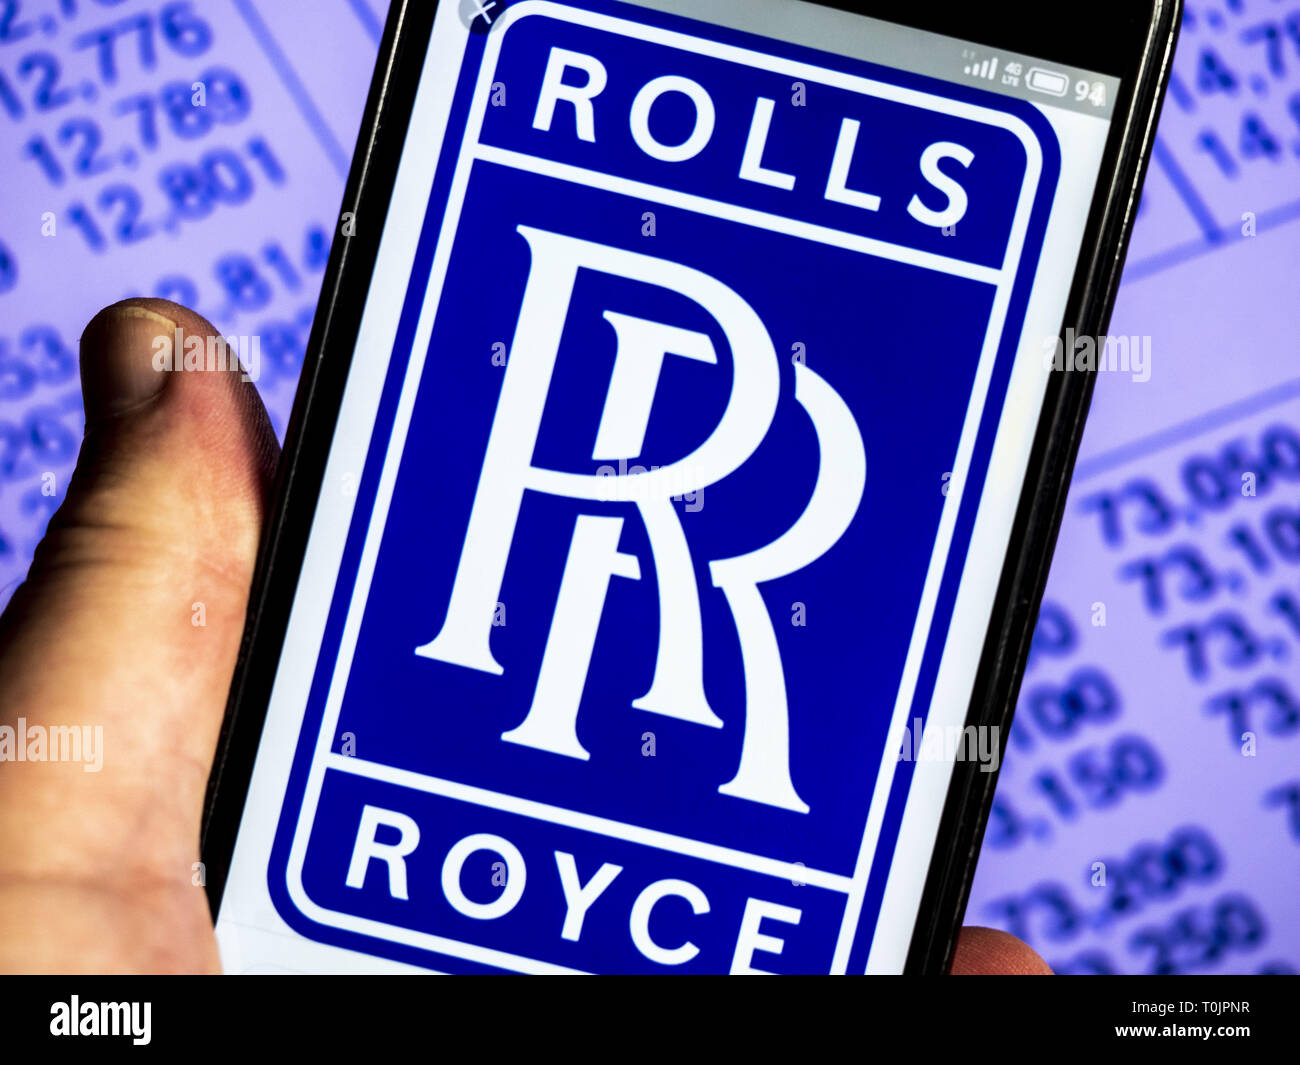 Ukraine. 20th Mar, 2019. Rolls-Royce Group plc company logo seen displayed on a smart phone. Credit: Igor Golovniov/SOPA Images/ZUMA Wire/Alamy Live News Stock Photo